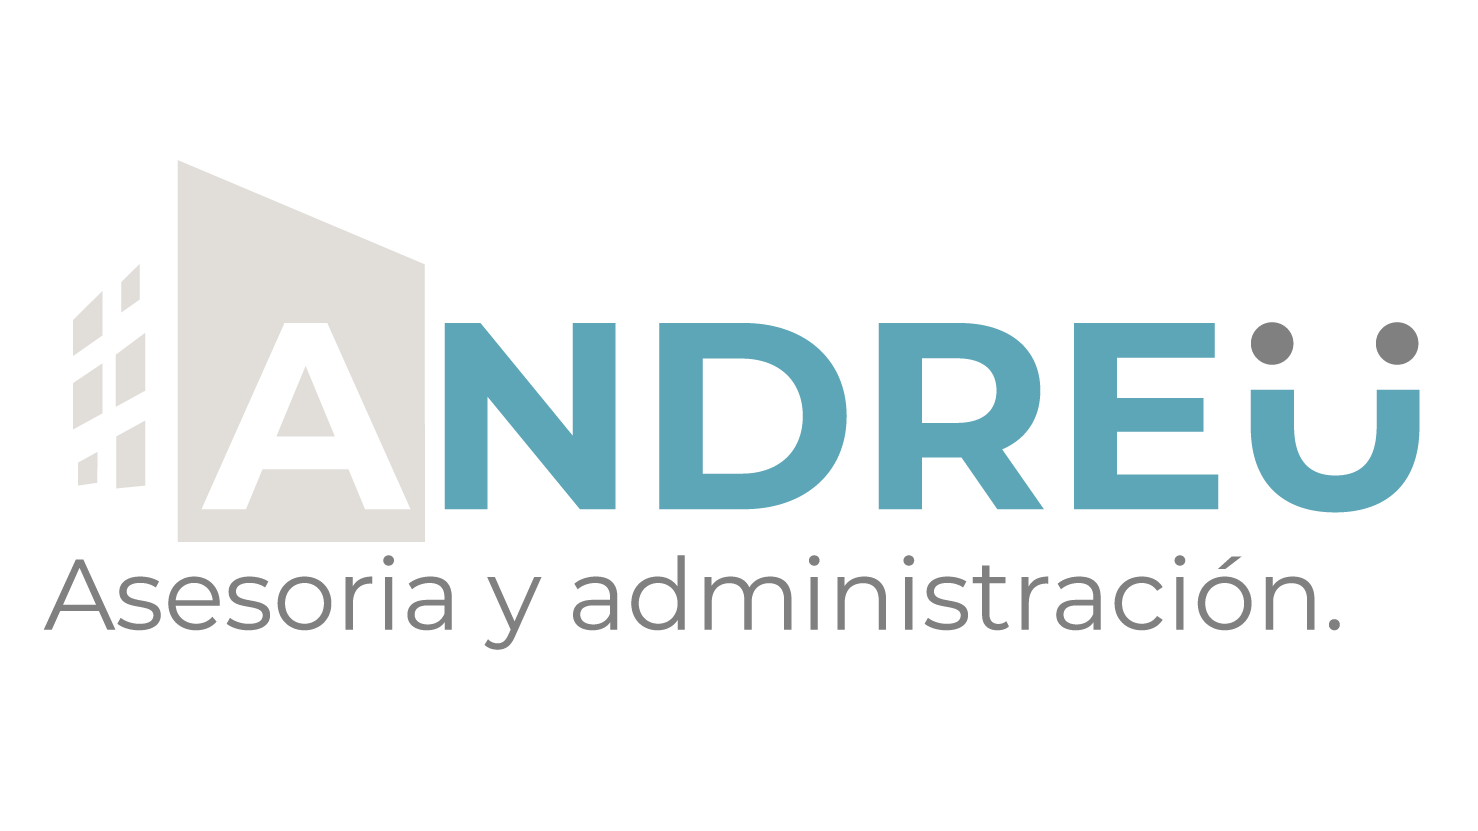 Administración Andreu